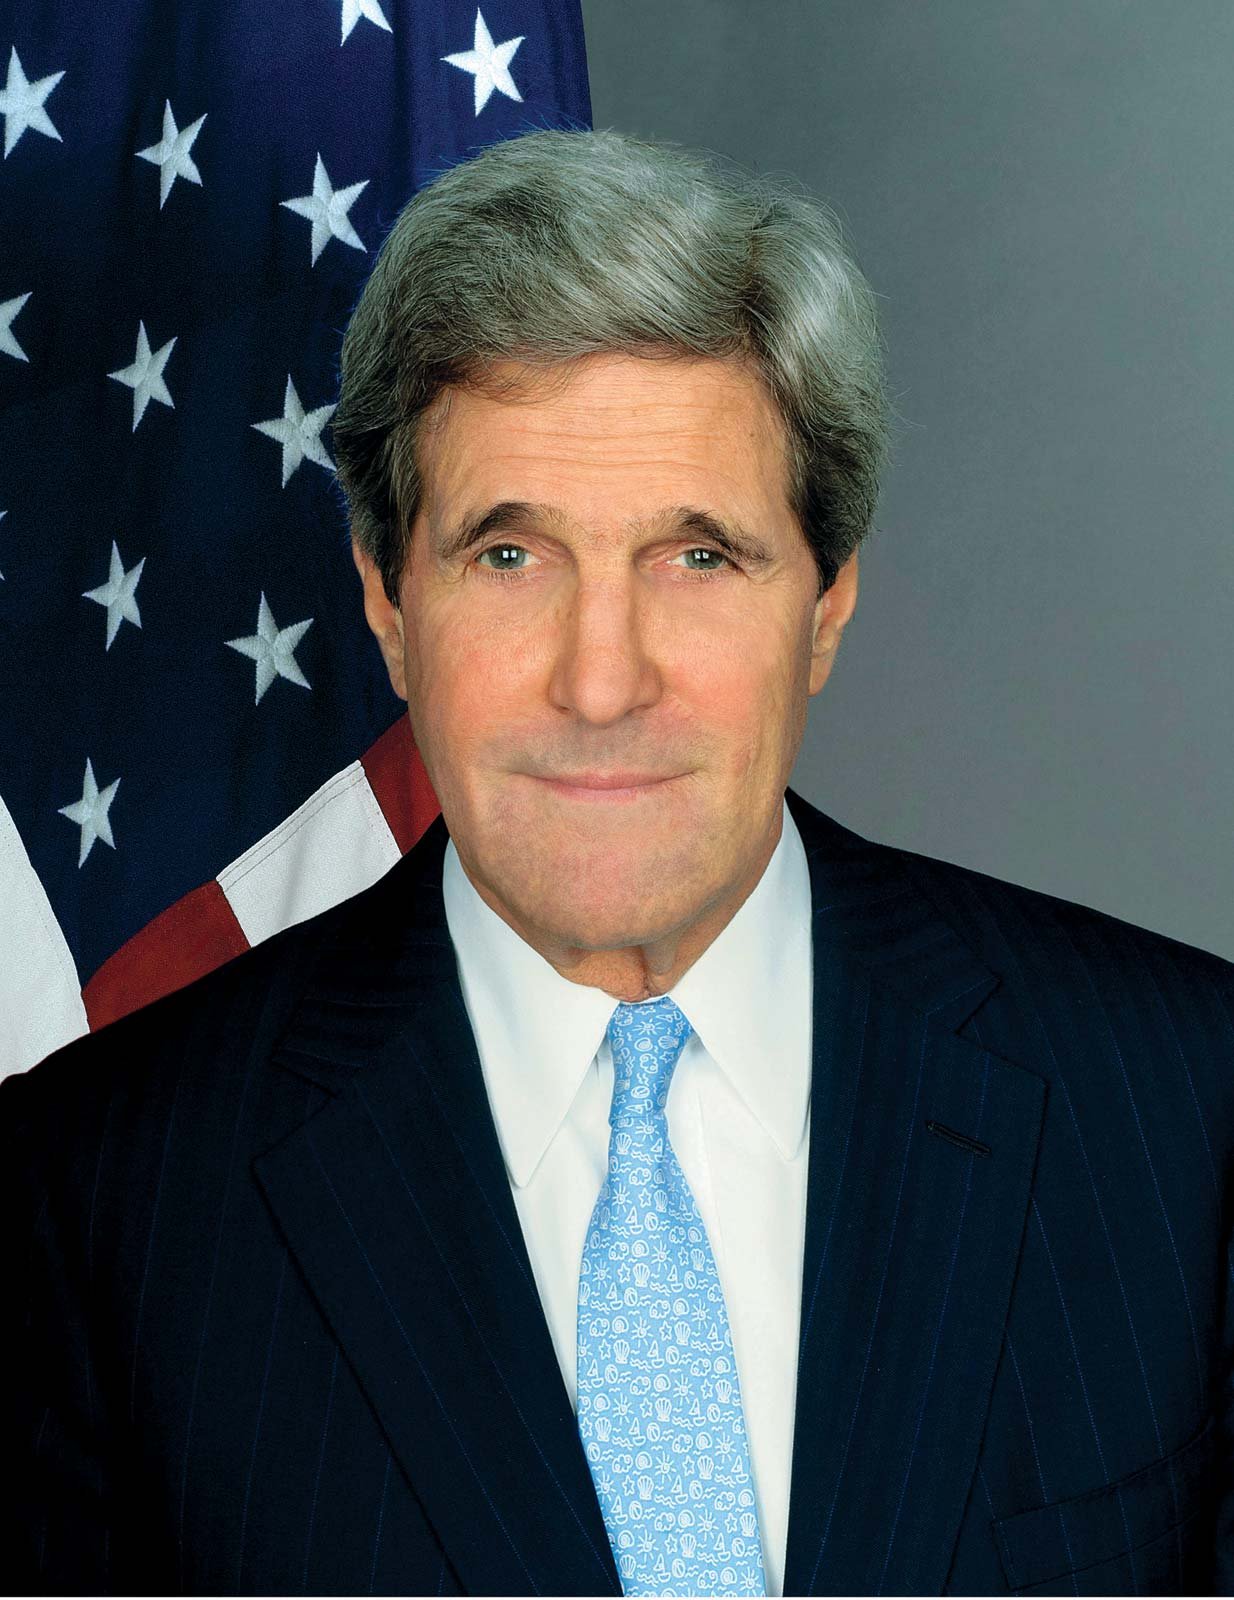 John Kerry  Net Worth 2021